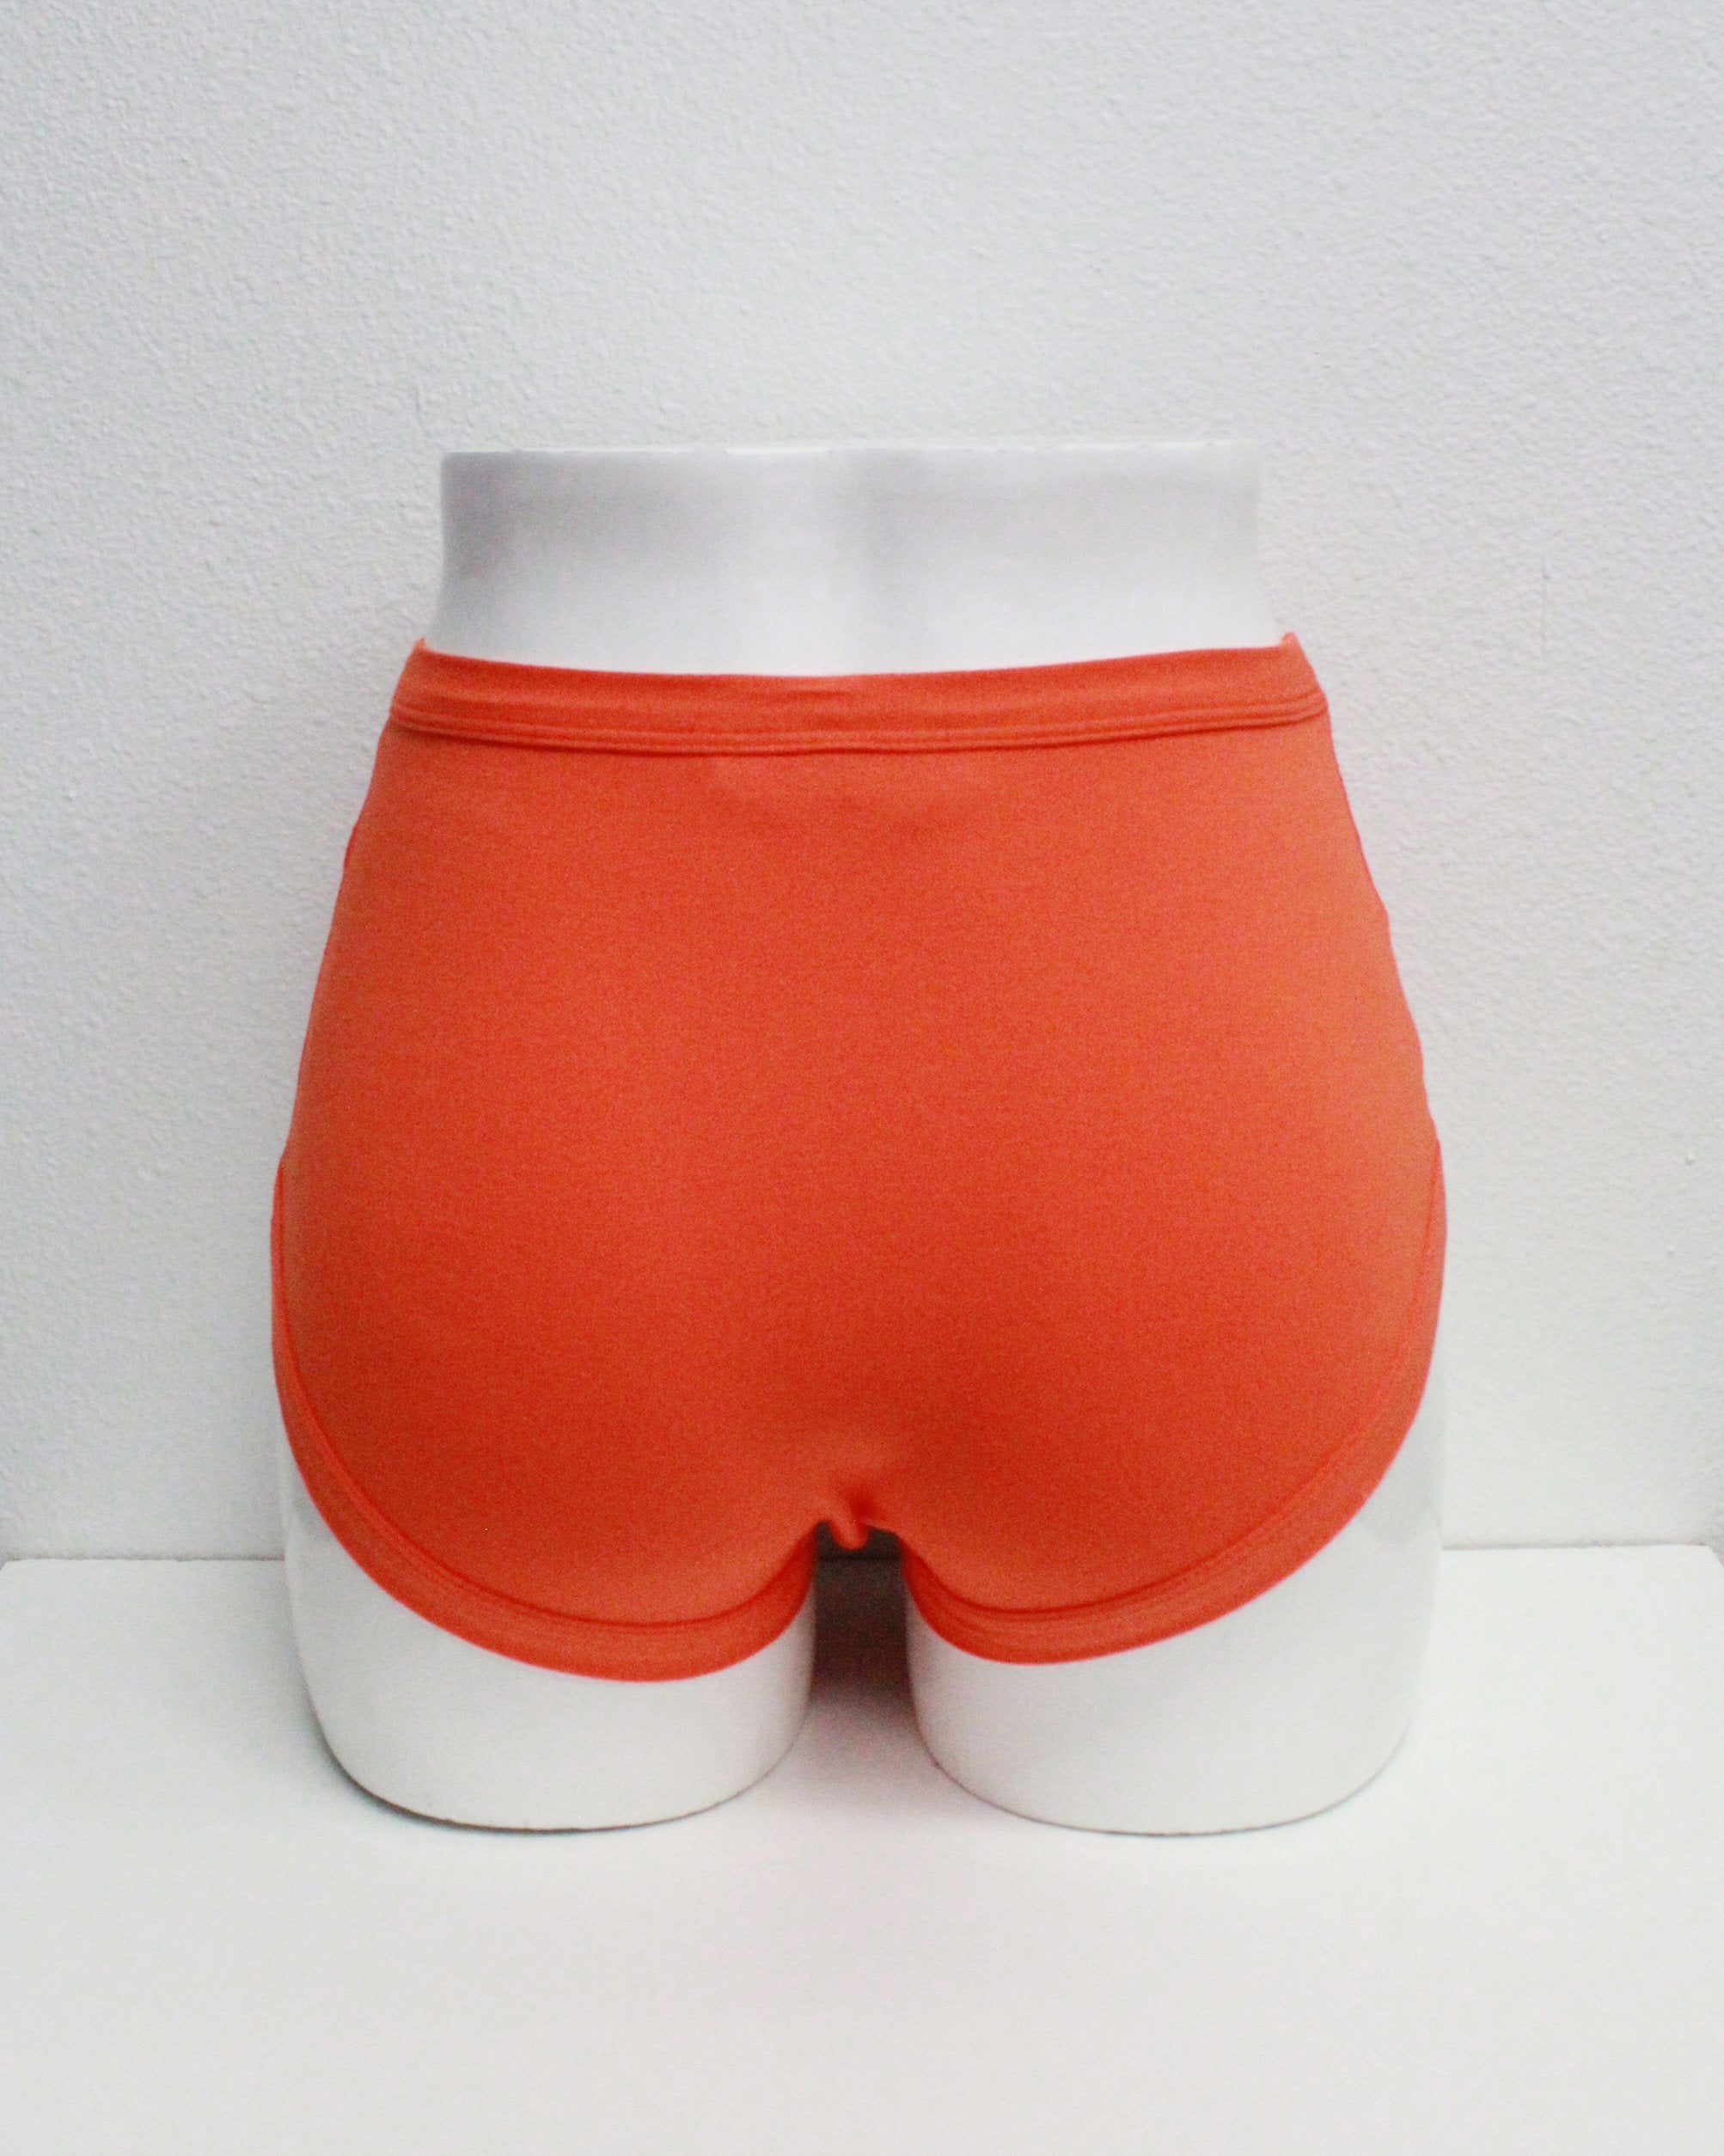 Back of Thunderpants organic cotton Original Panel Pant style underwear in plain tangerine orange shown on mannequin bum and legs.